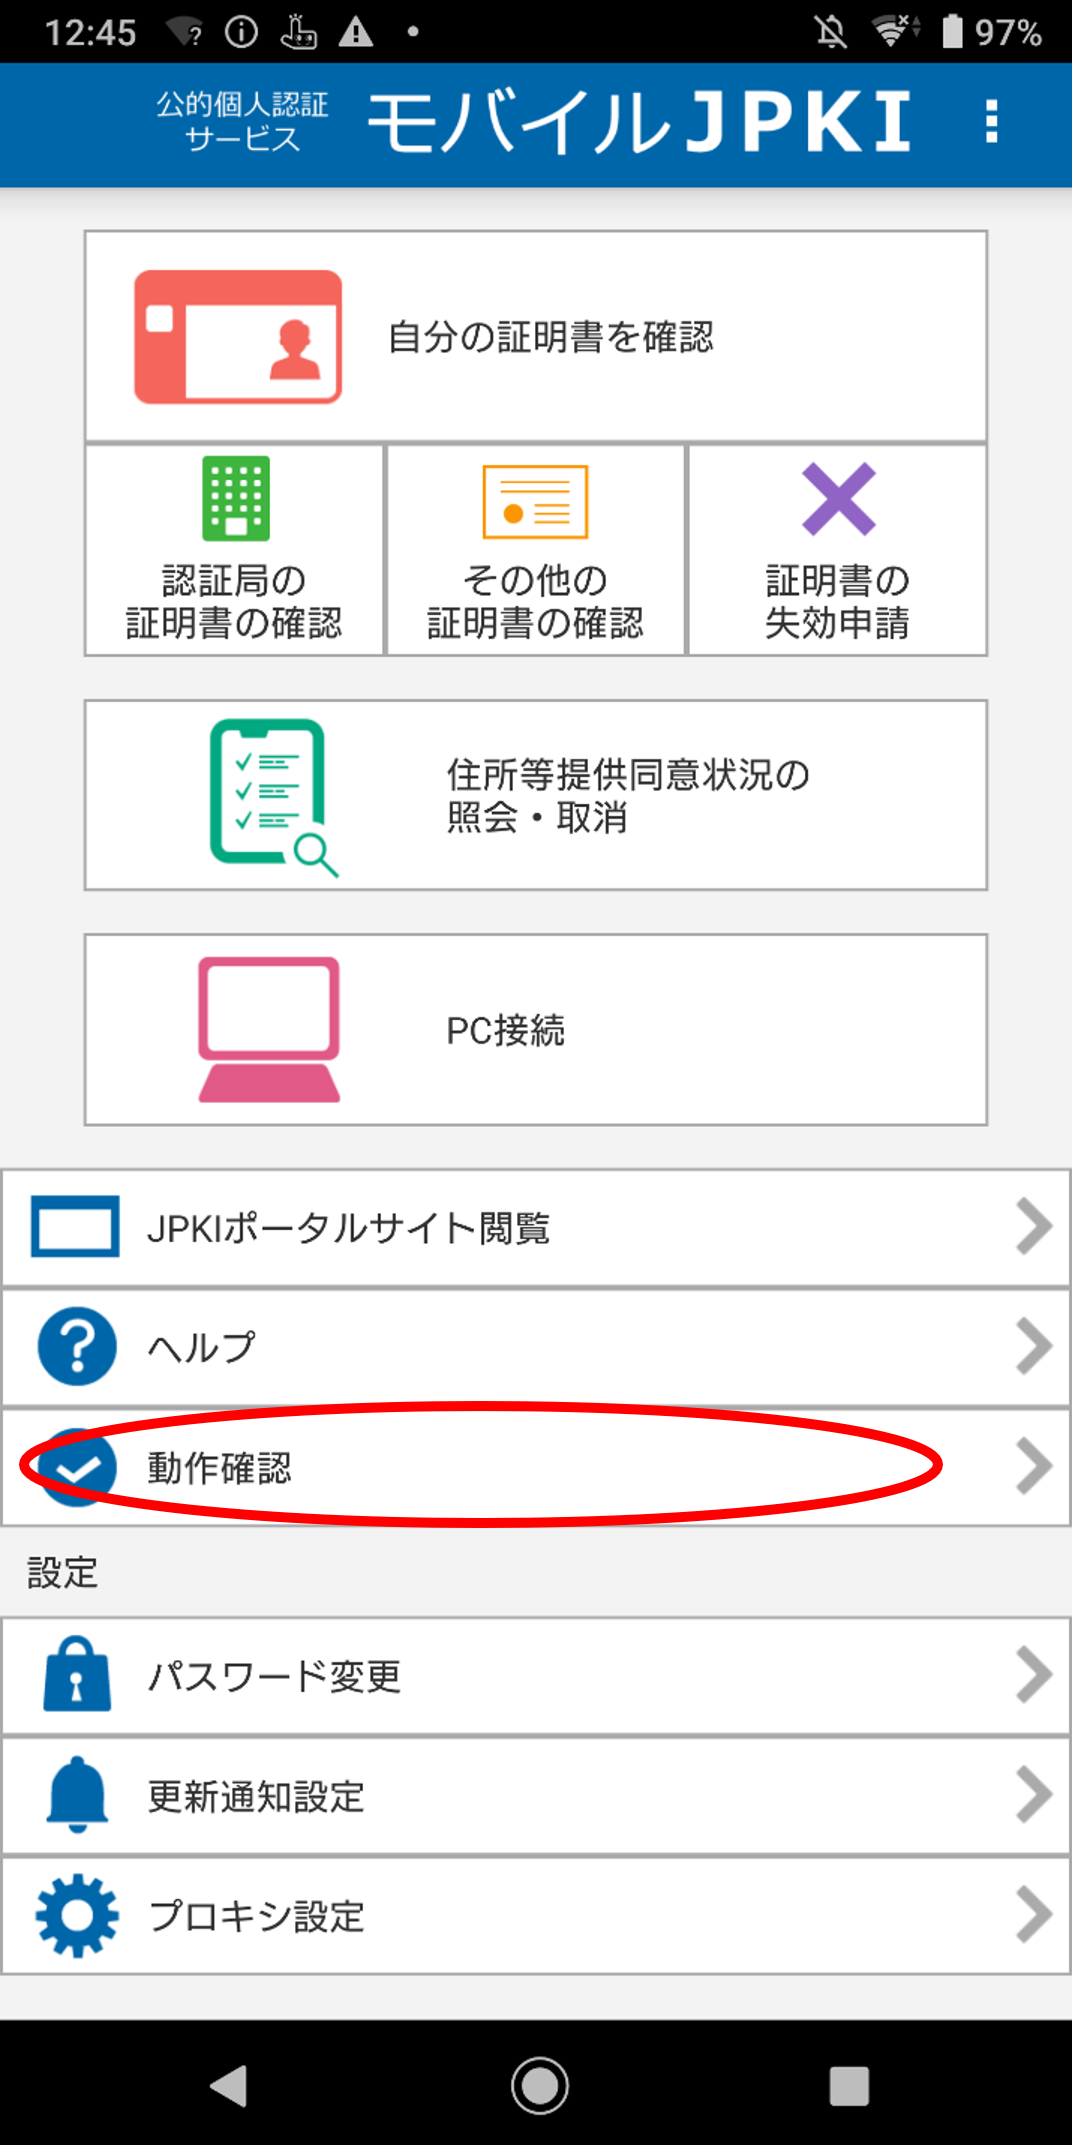 「JPKI利用者ソフト」の画面イメージ